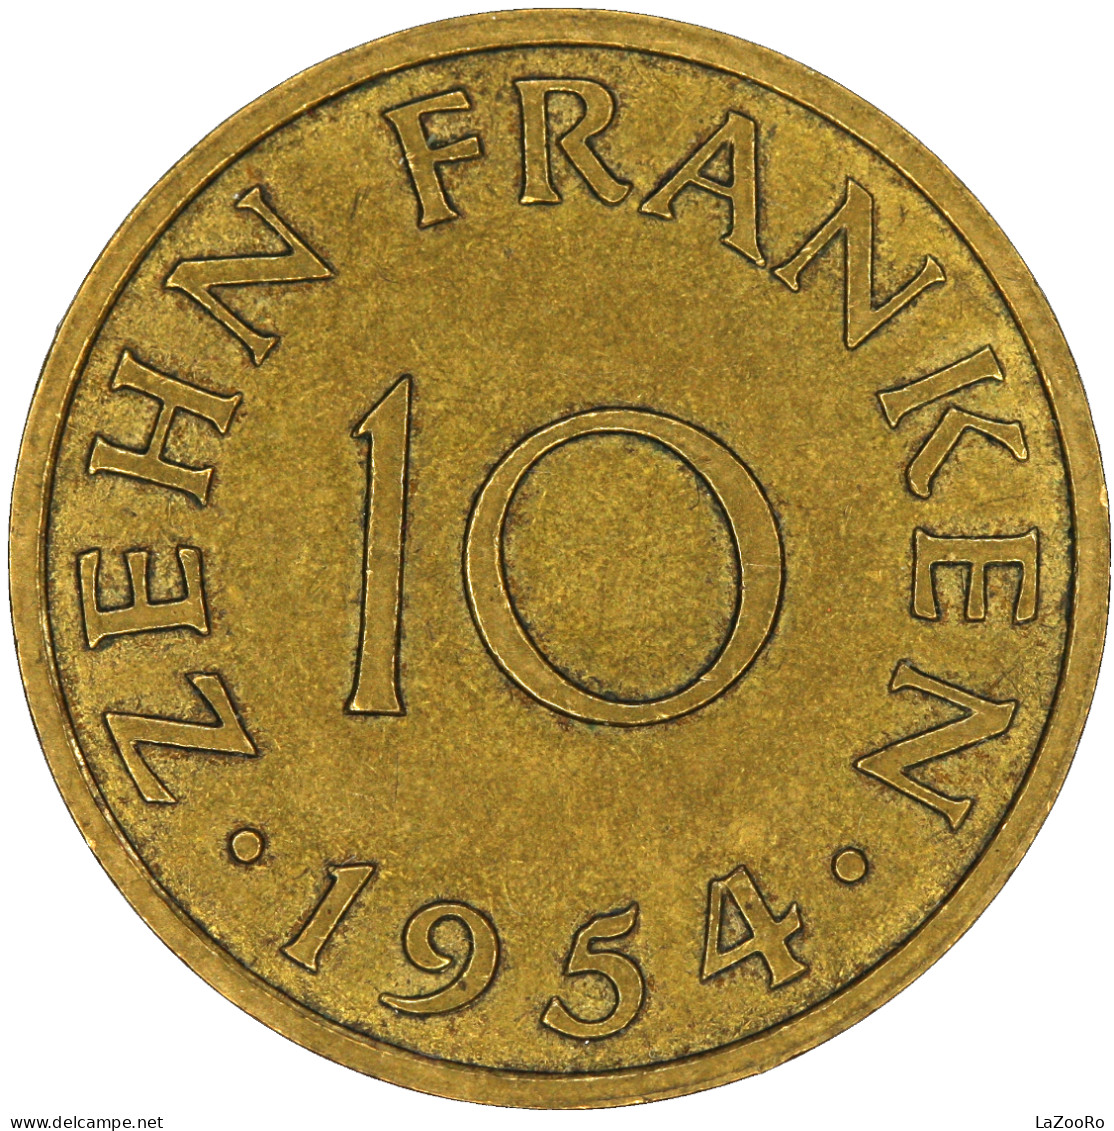 LaZooRo: Germany SAARLAND 10 Franken 1954 UNC - 10 Francos